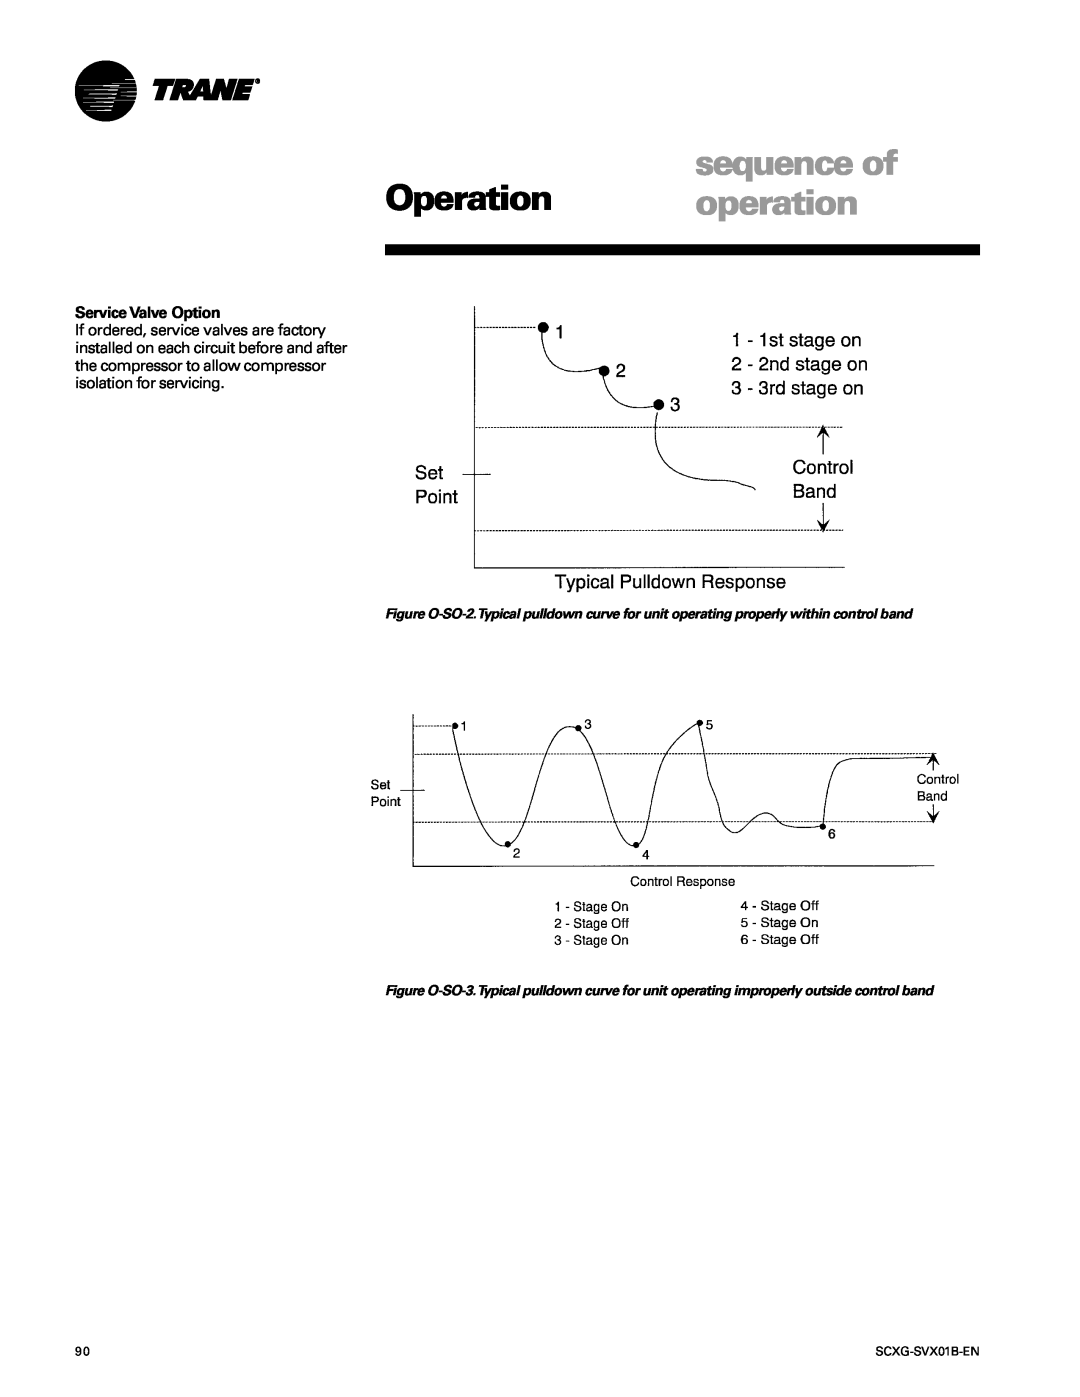 Trane SCXG-SVX01B-EN manual Operation, sequence of operation, Service Valve Option 